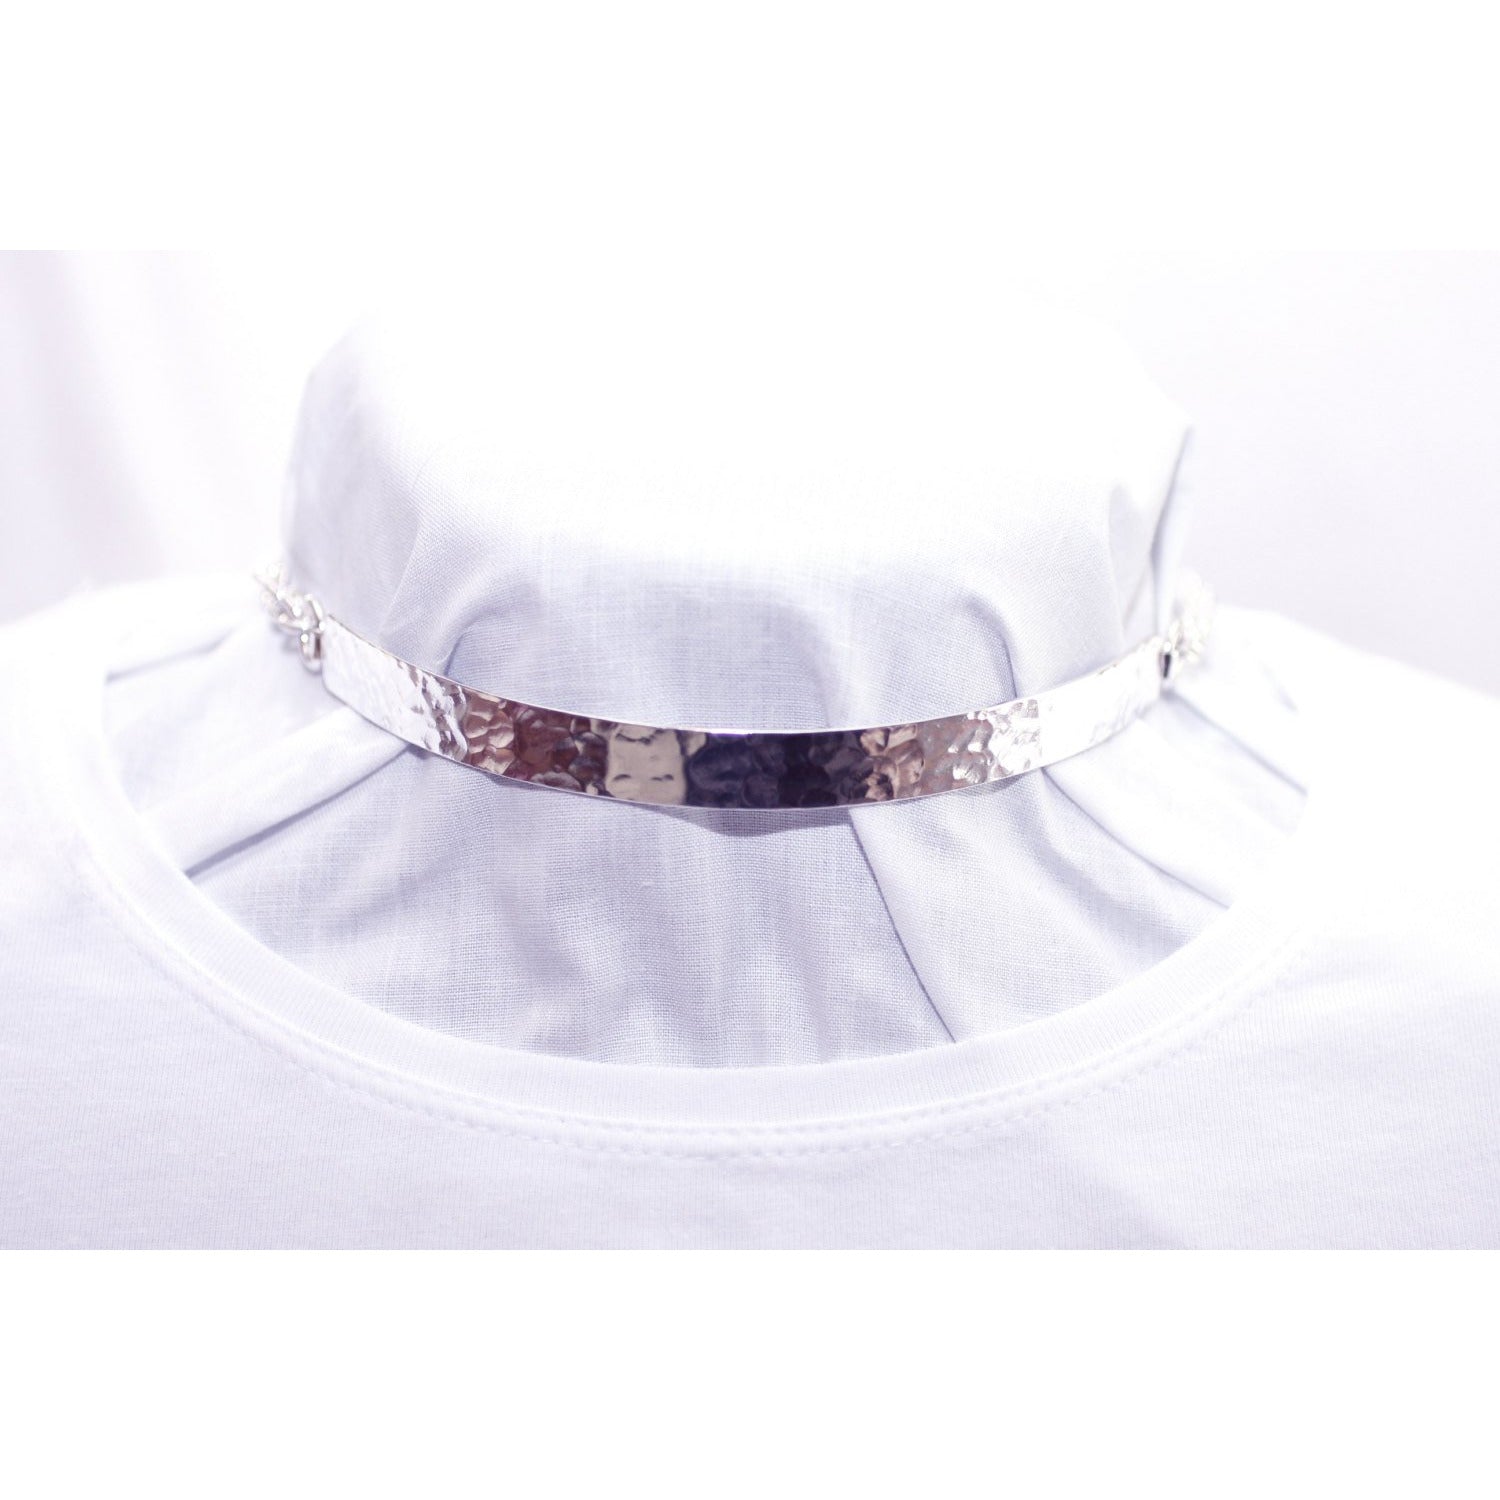 metal choker collar